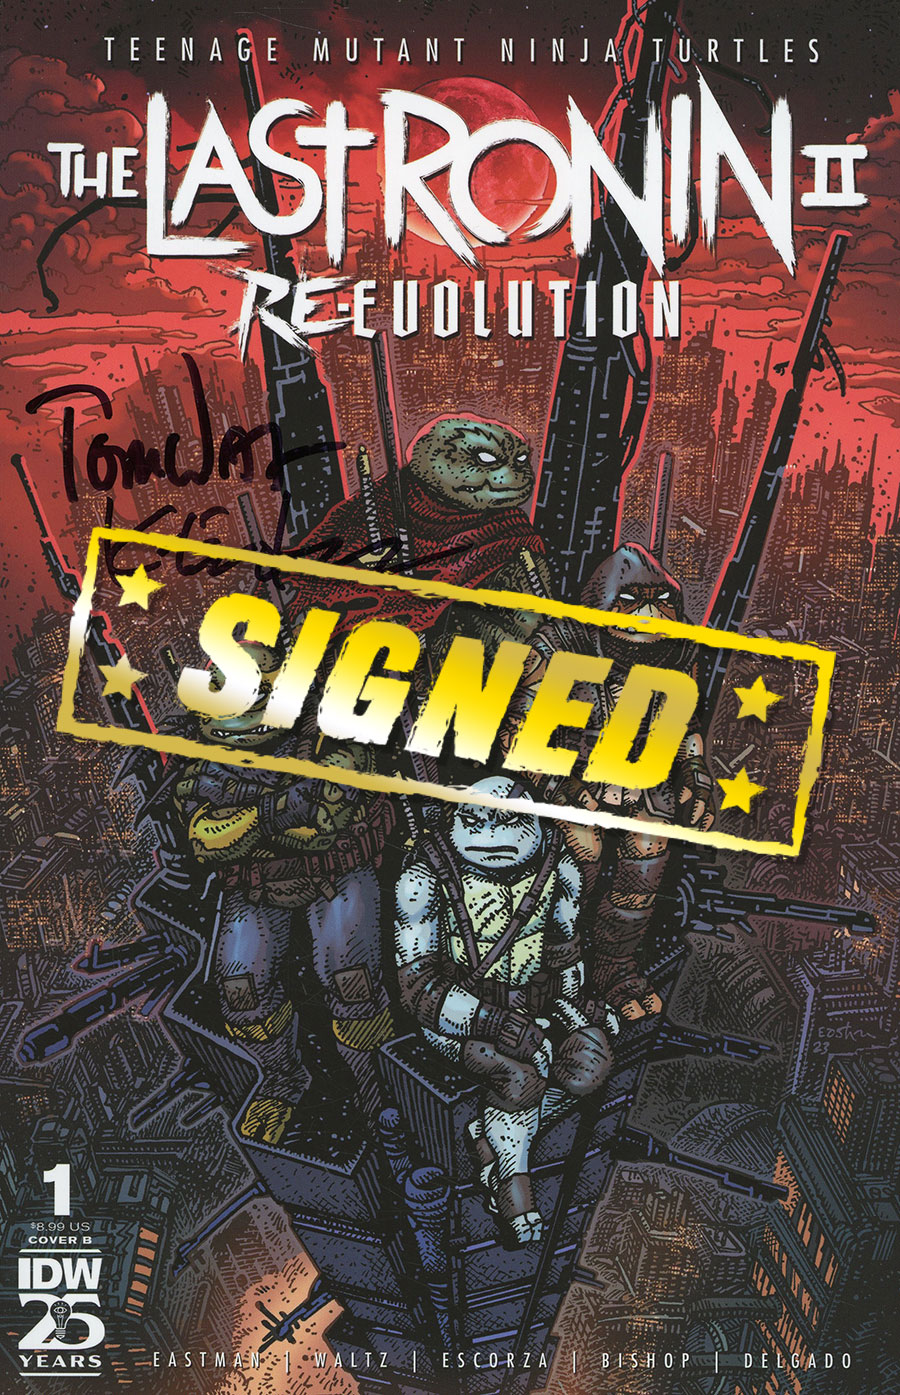 Teenage Mutant Ninja Turtles The Last Ronin II Re-Evolution #1 Cover J Variant Kevin Eastman Cover Signed By Kevin Eastman & Tom Waltz